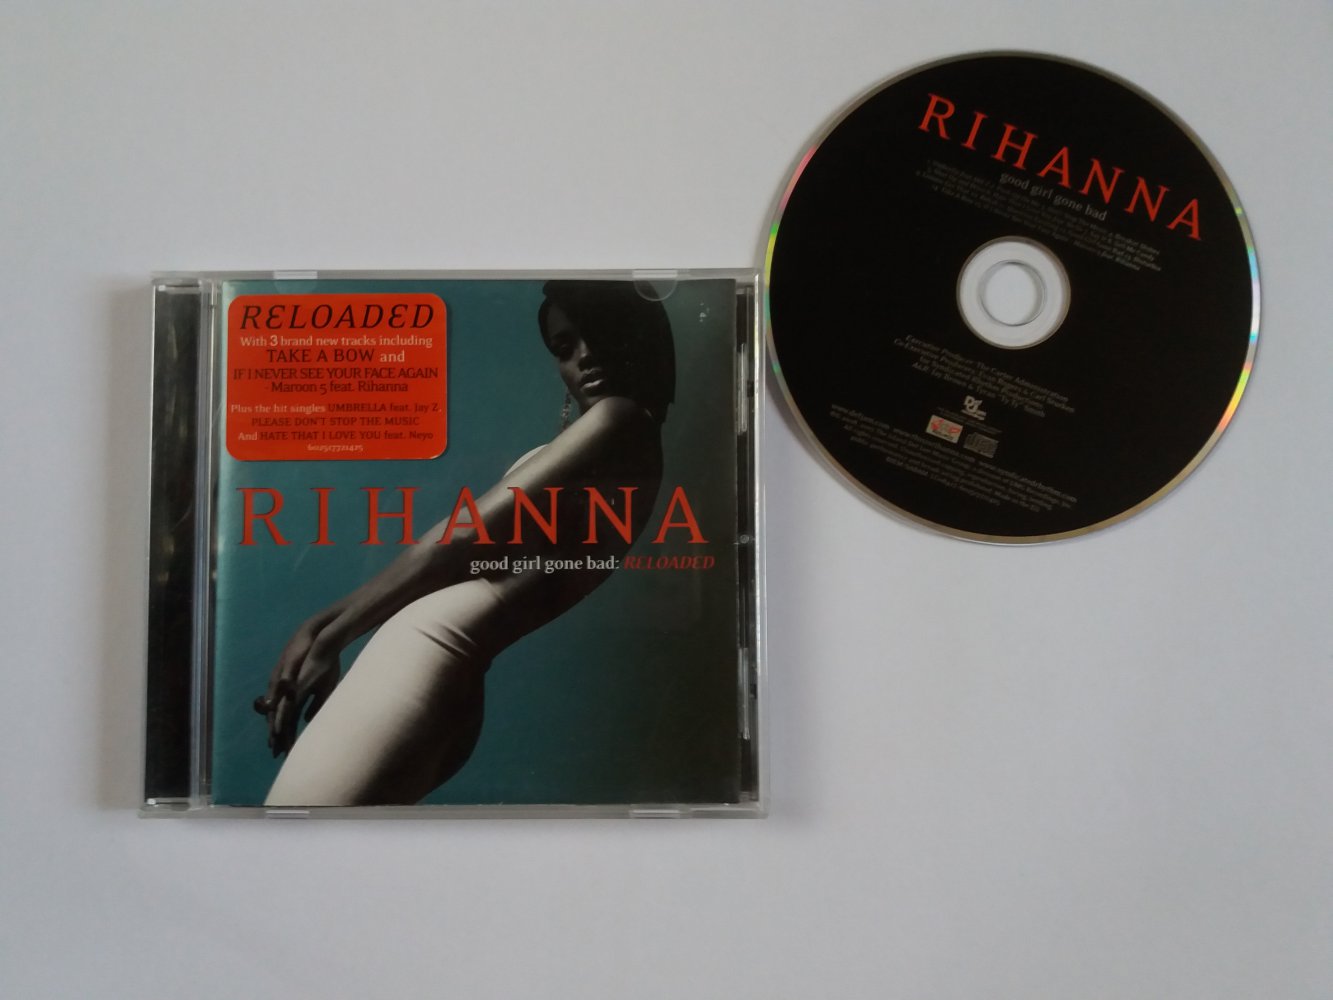 Good girl gone bad: Reloaded - Rihanna